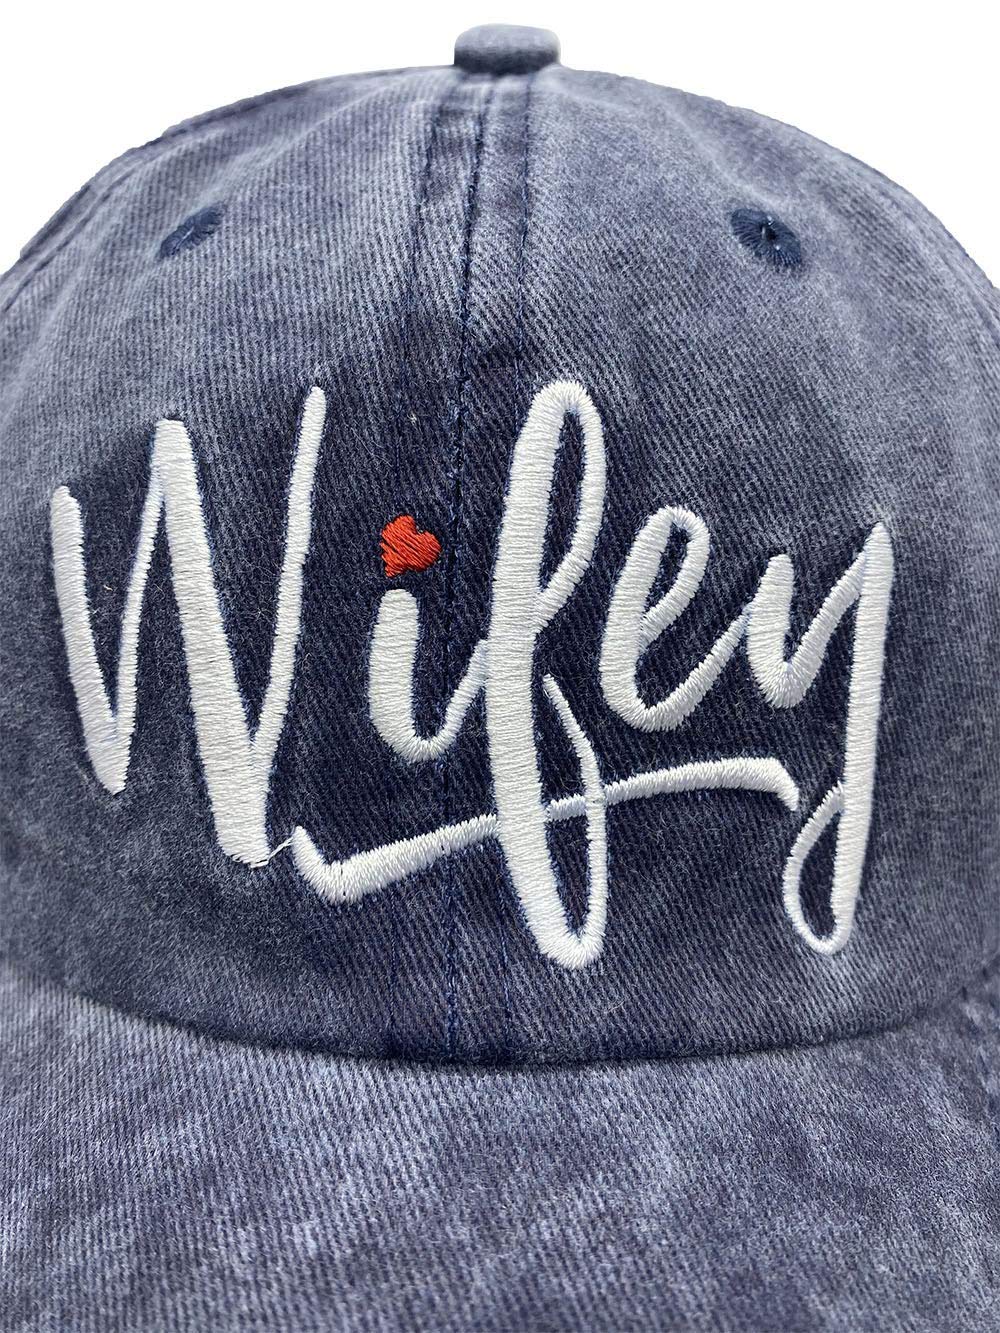 MANMESH HATT Embroidered Wifey Ponytail Hat Vintage Washed Adjustable Denim Baseball Cap for Women (Navy, One Size)